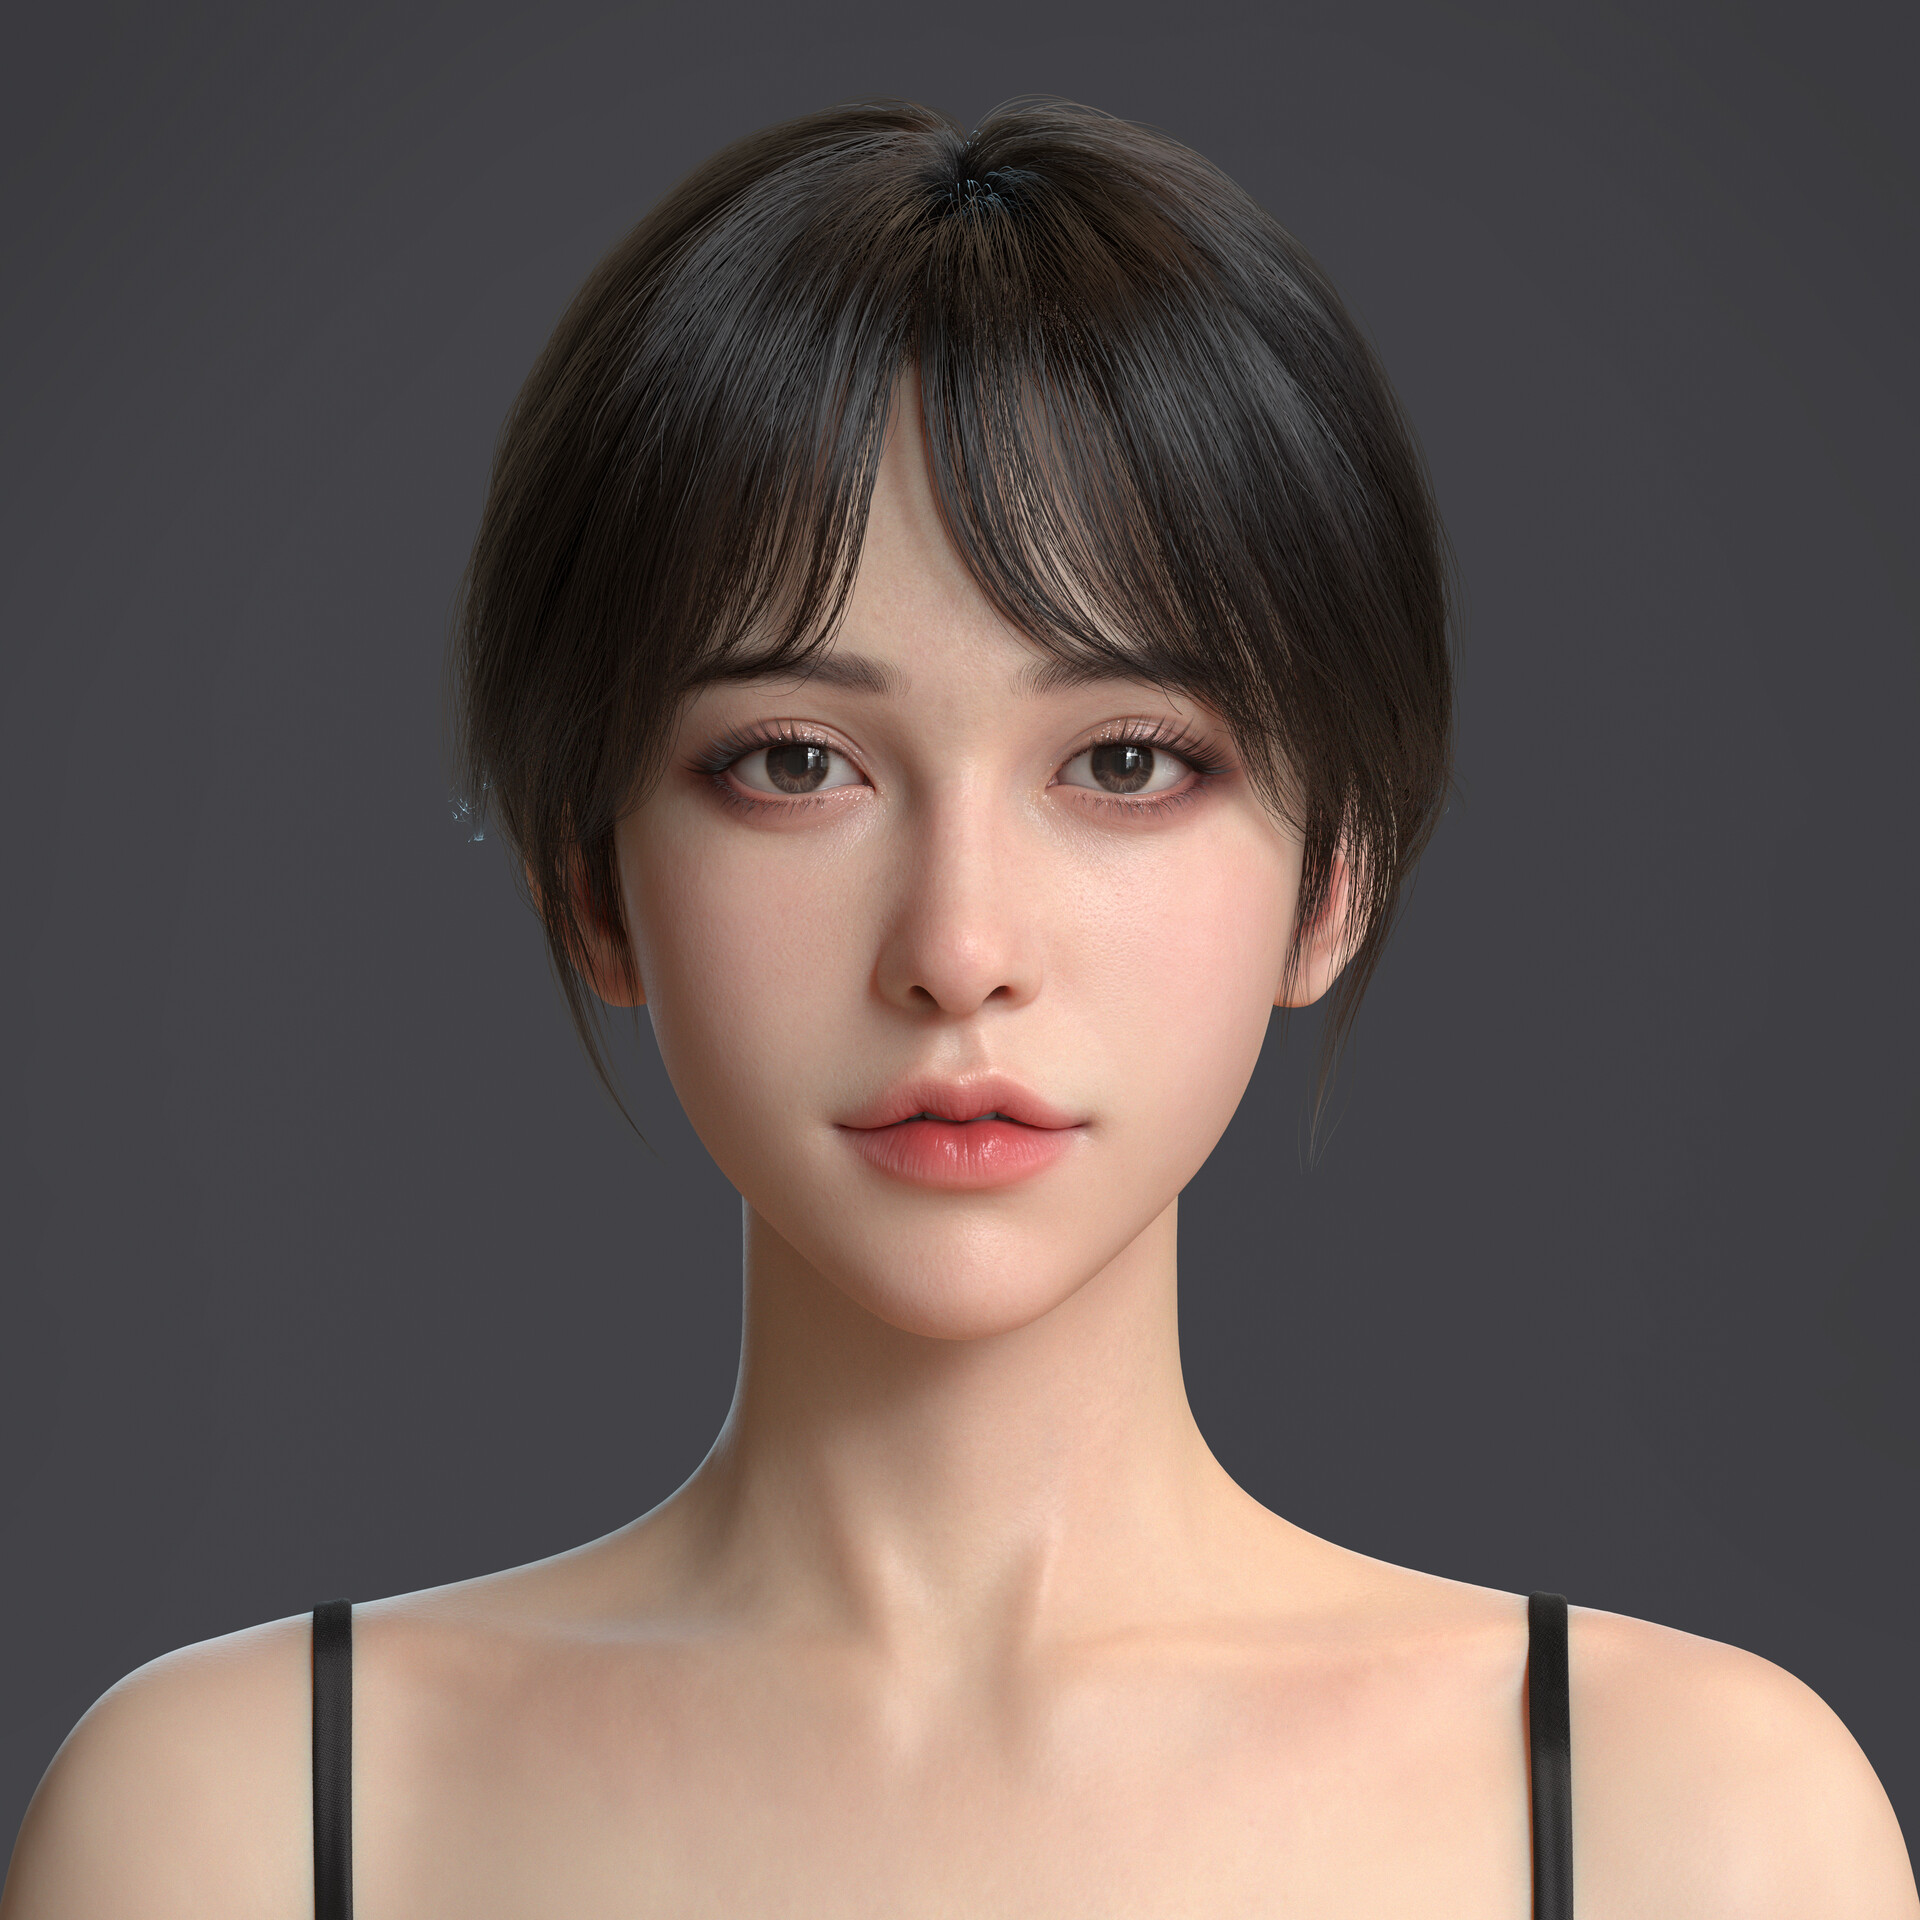 General 1920x1920 digital art artwork ArtStation CGI women portrait face Asian gray background simple background brunette looking at viewer pale